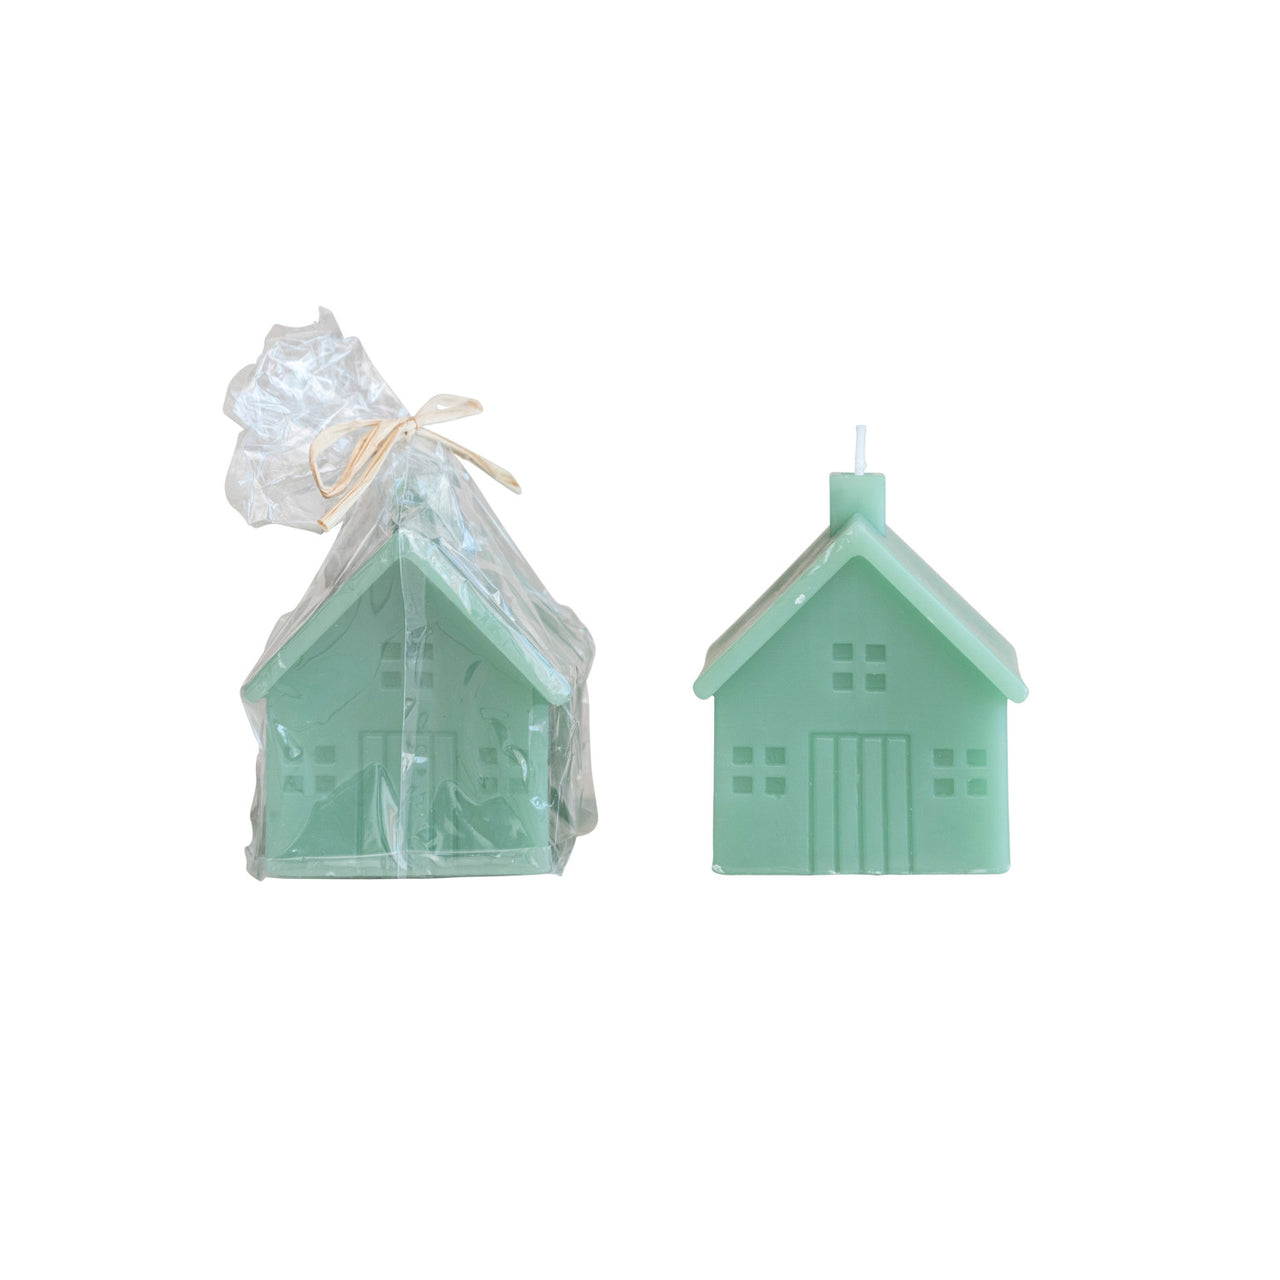 House Shaped Candle - Mint